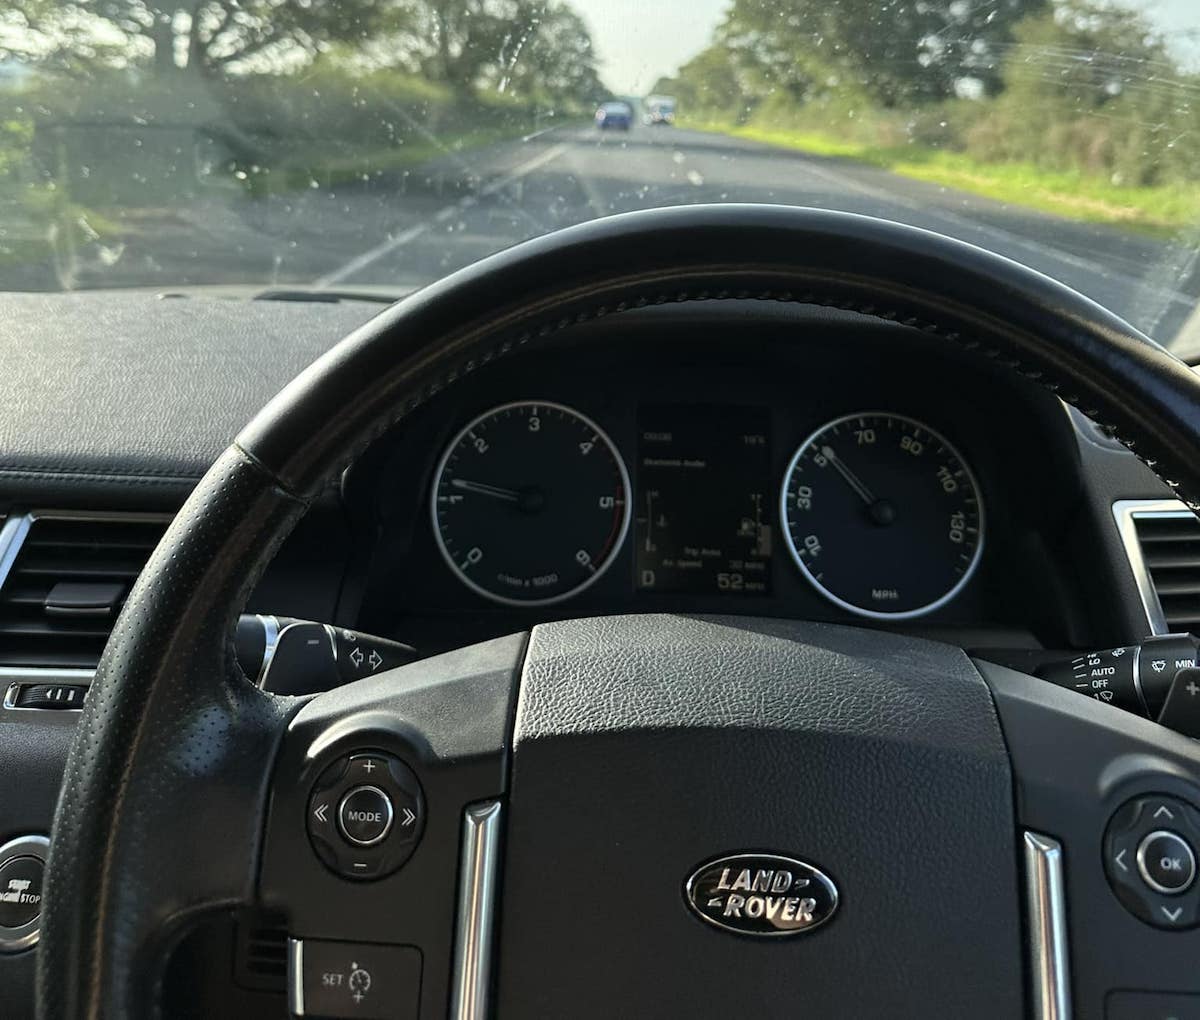 Range Rover steering wheel.